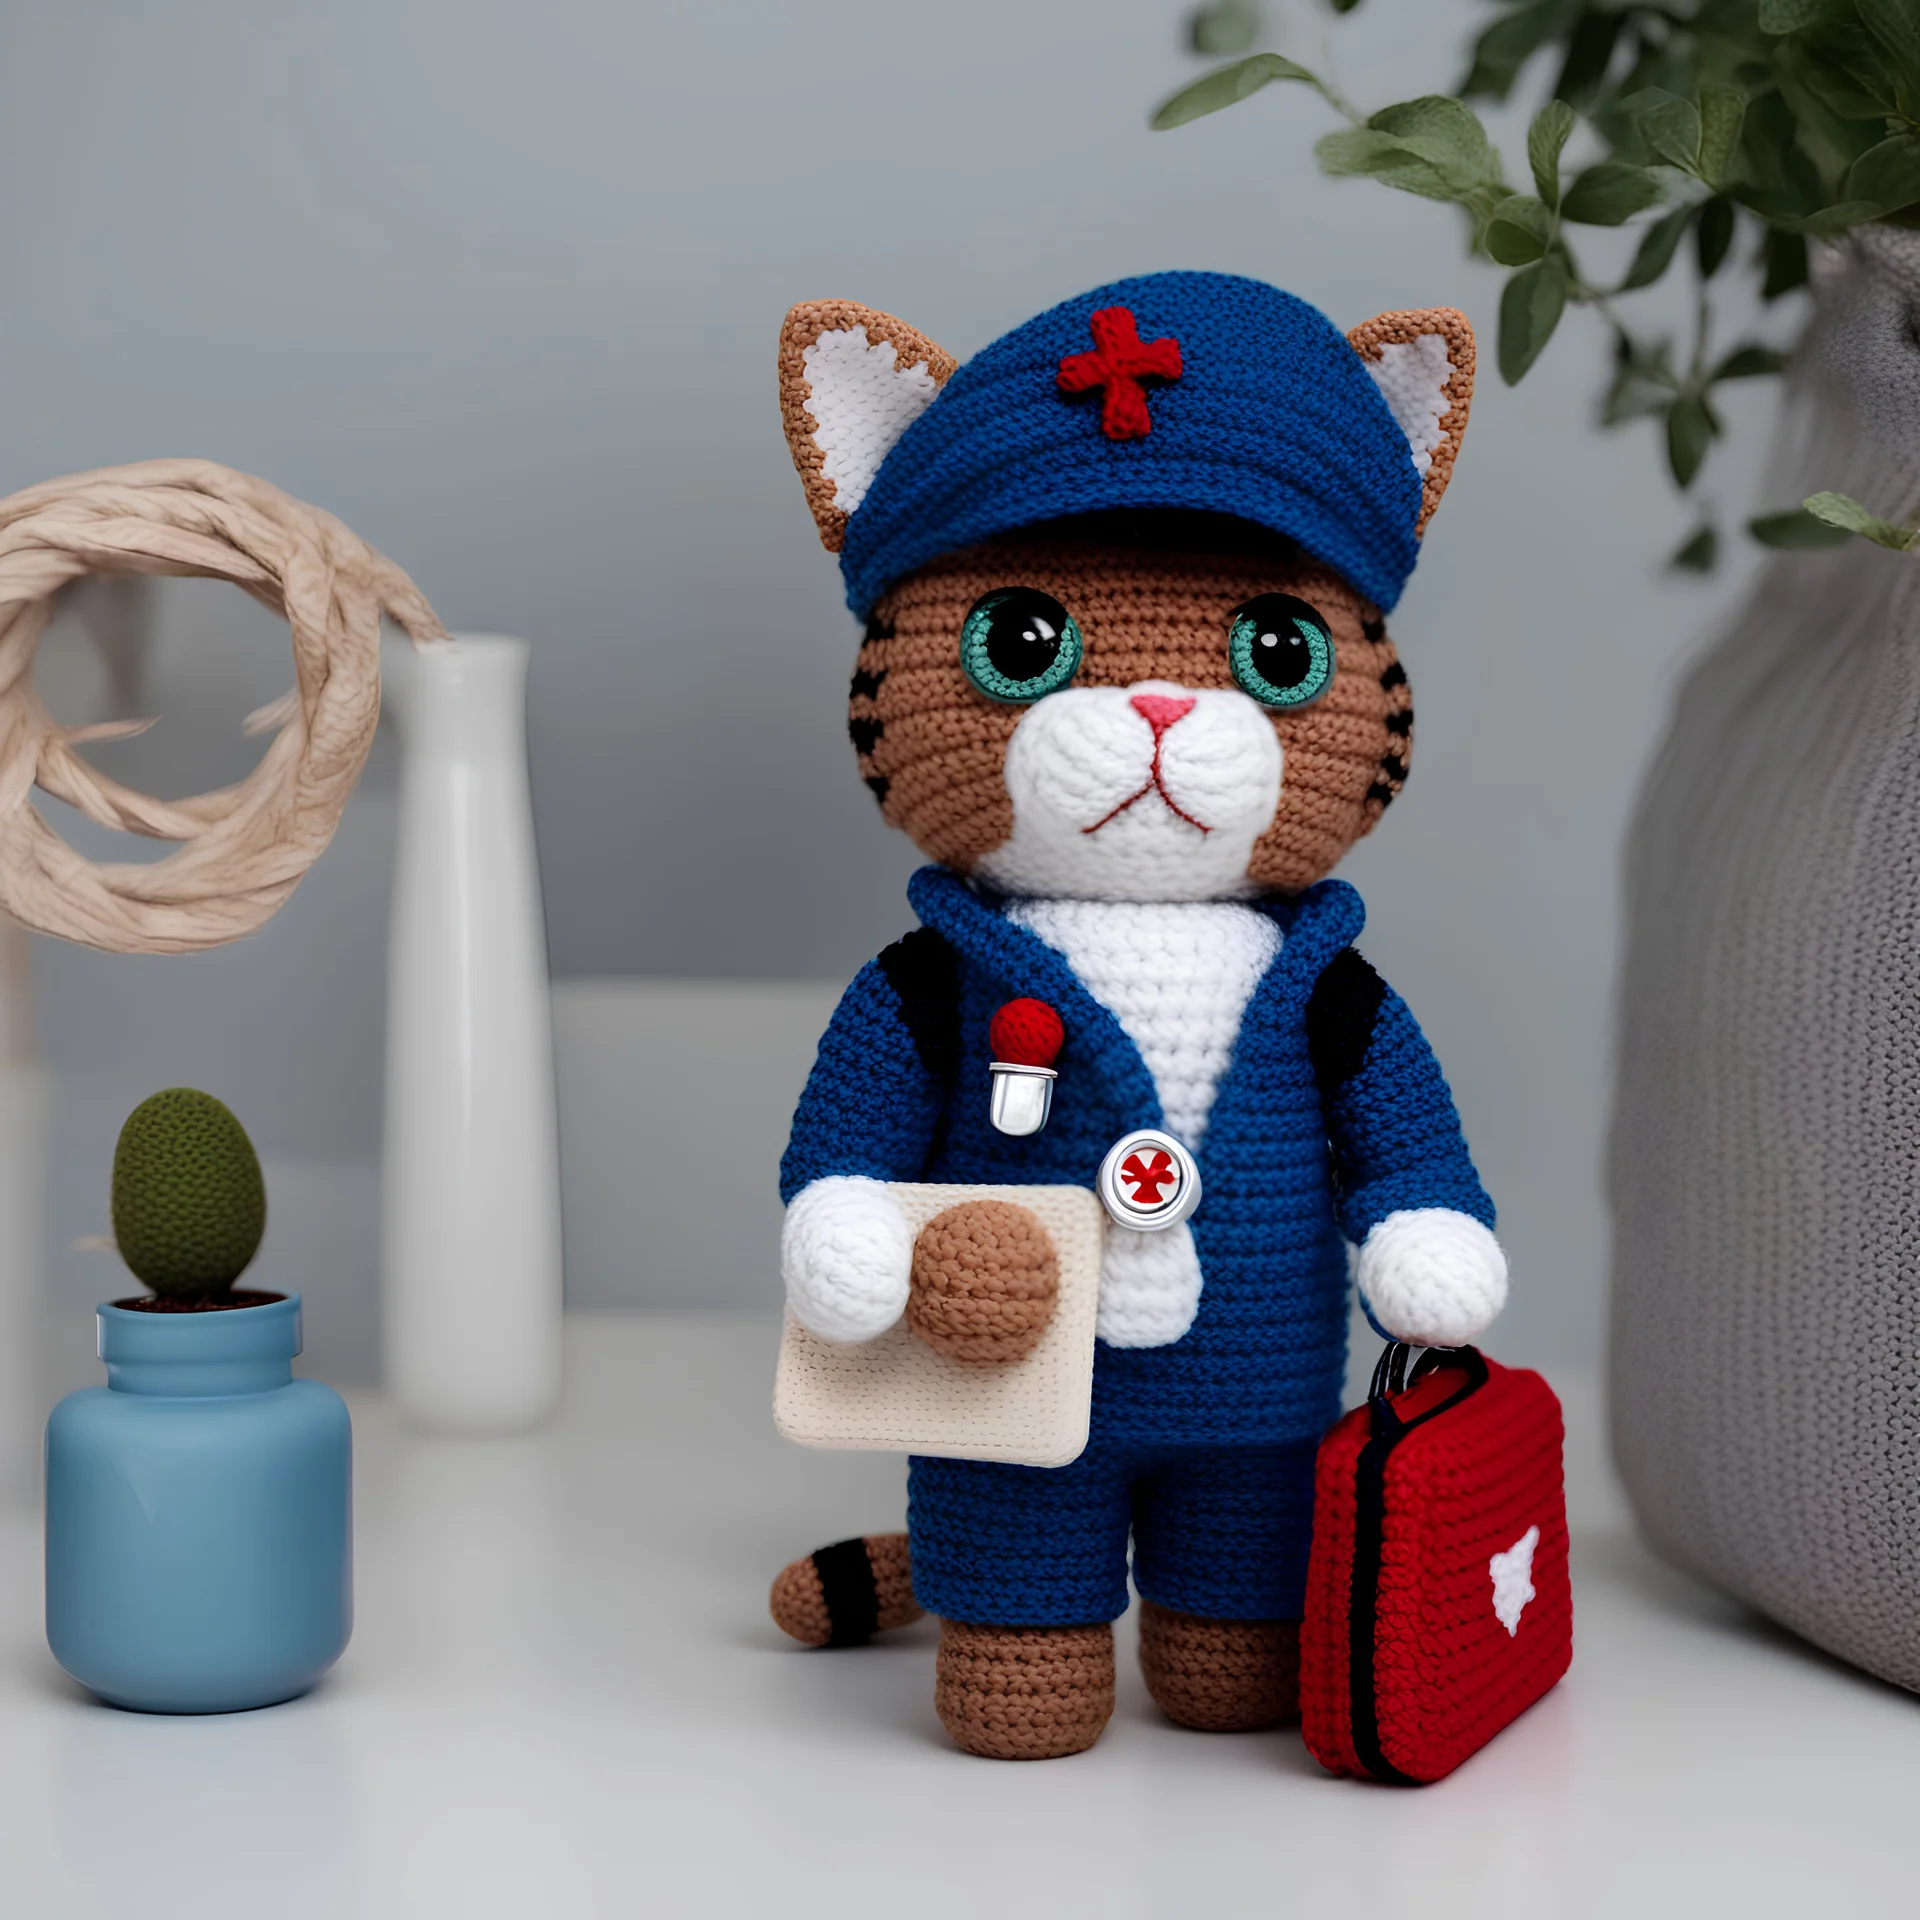 A crochet nurse cat in a blue uniform, carrying a crochet medical bag and a clipboard.